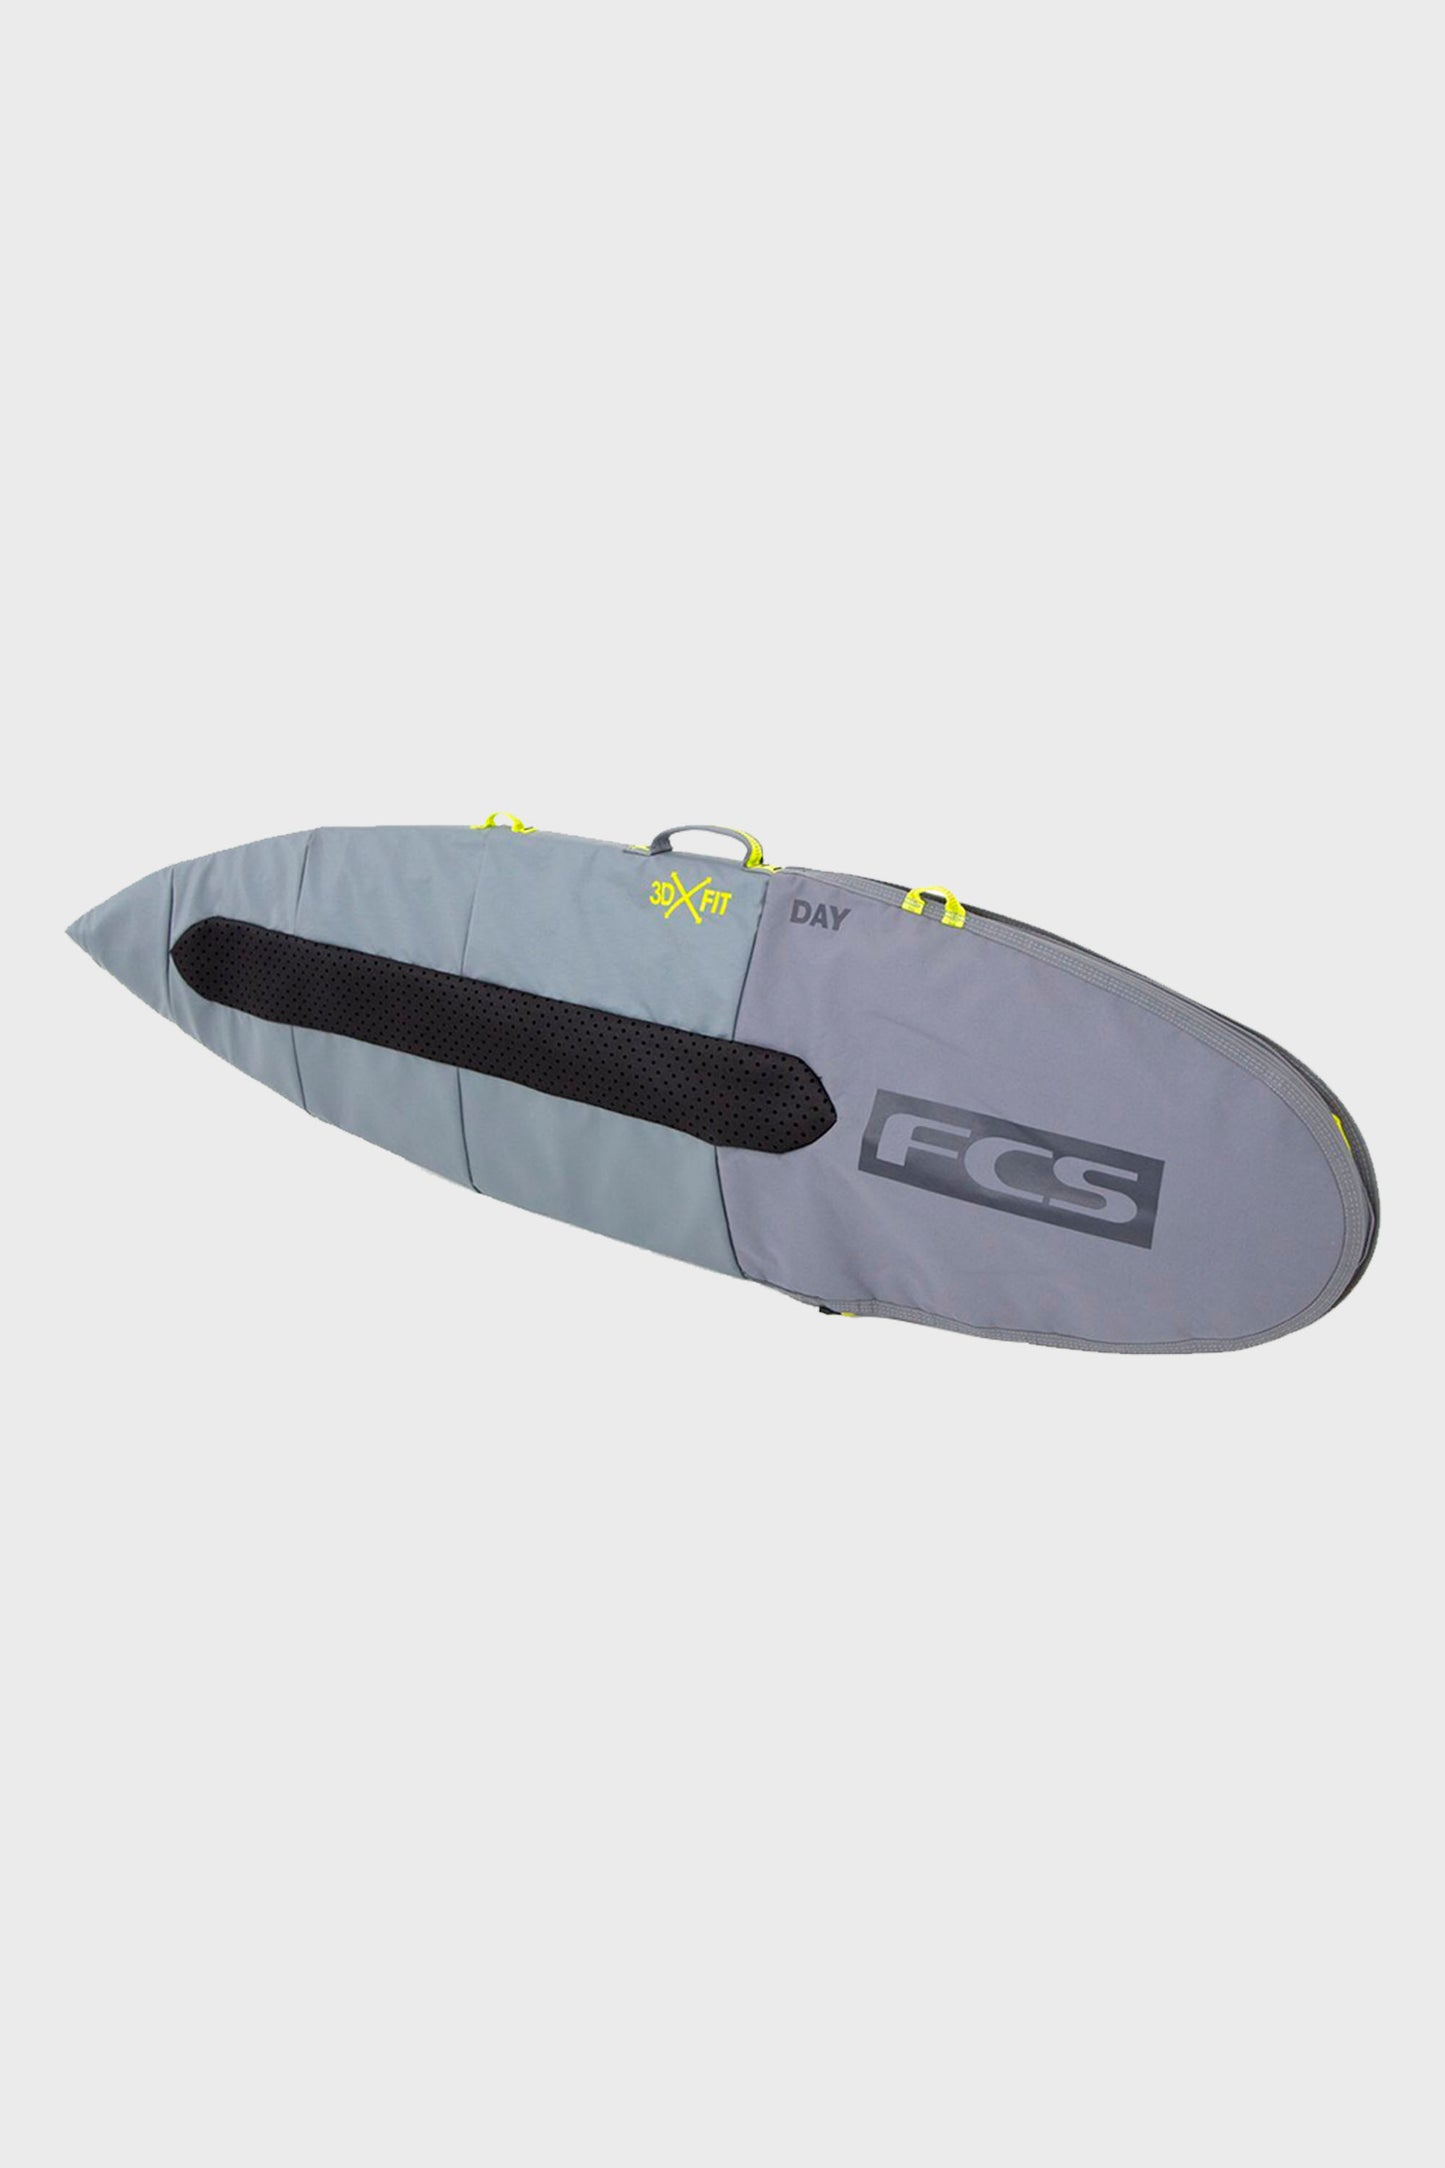 
                  
                    Pukas-Surf-Shop-FCS-boardbags-Day-All-Purpose-6.7-coolgrey
                  
                